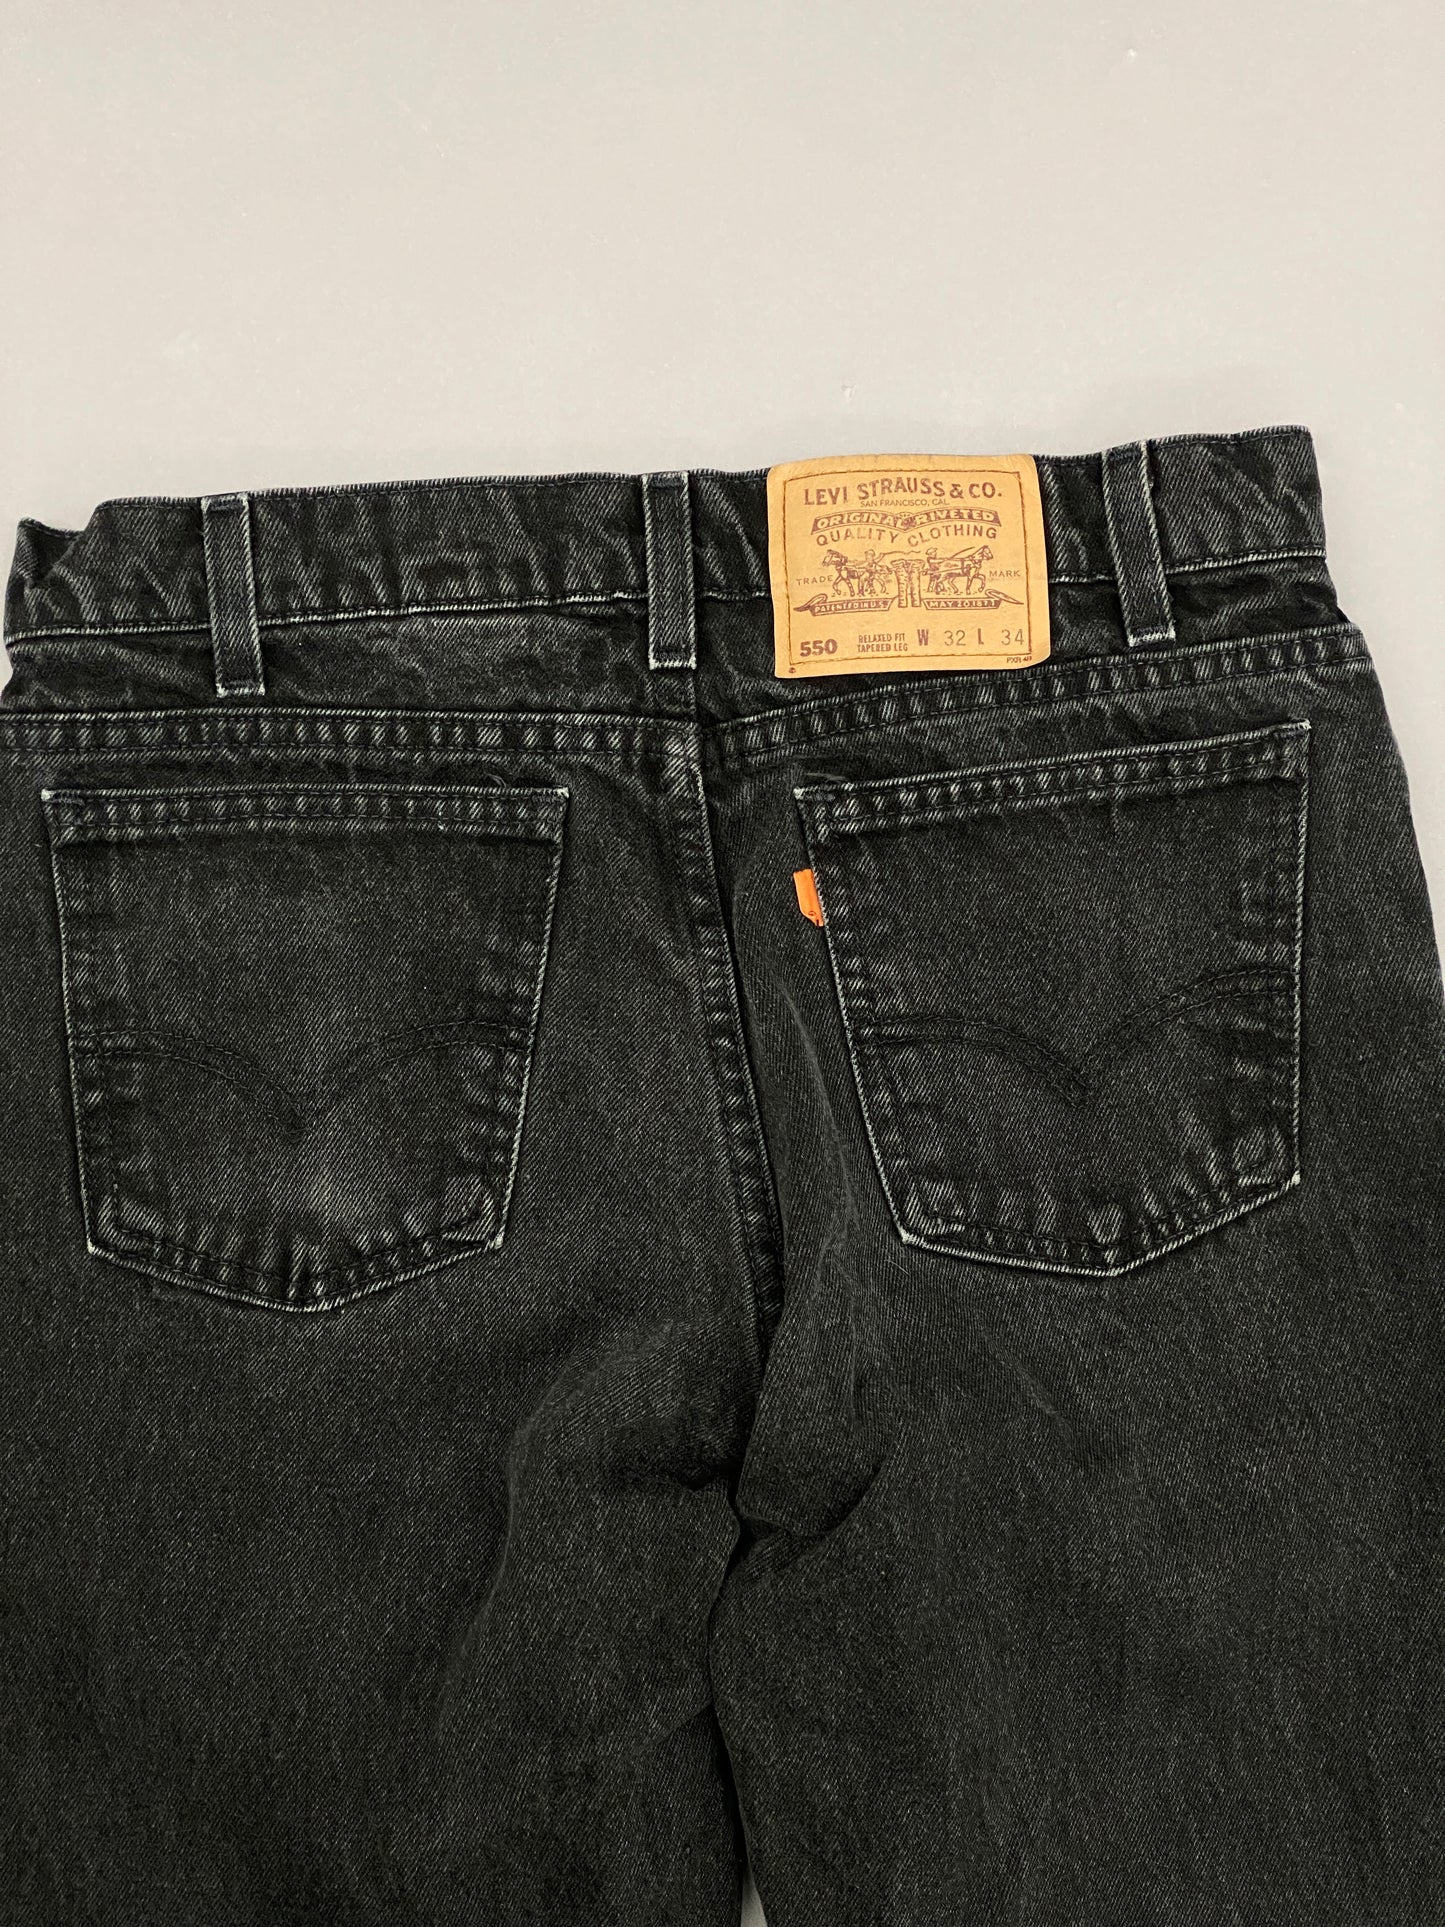 Levis Orange Tab Vintage Jeans - 32 x 34